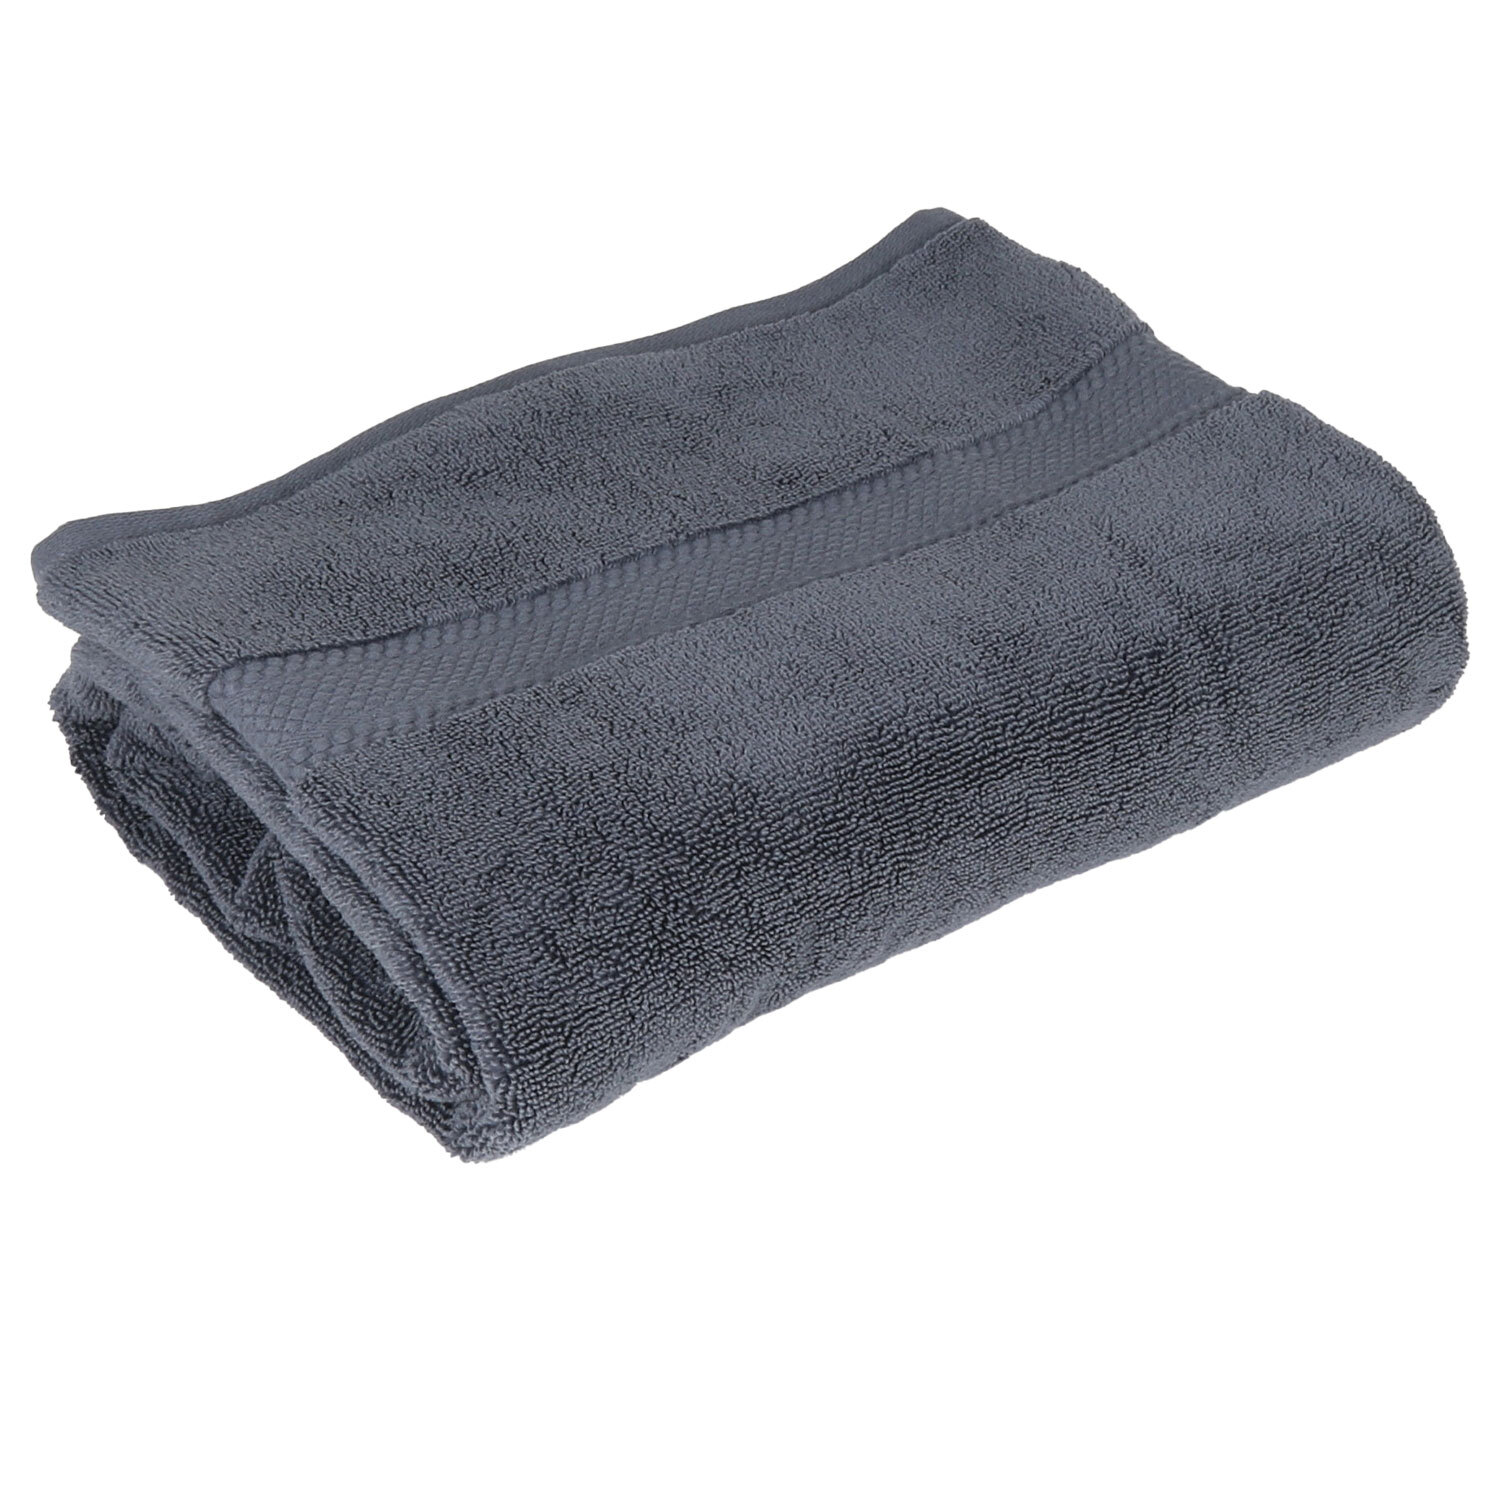 Deluxe Bath Towel - Midnight Grey Image